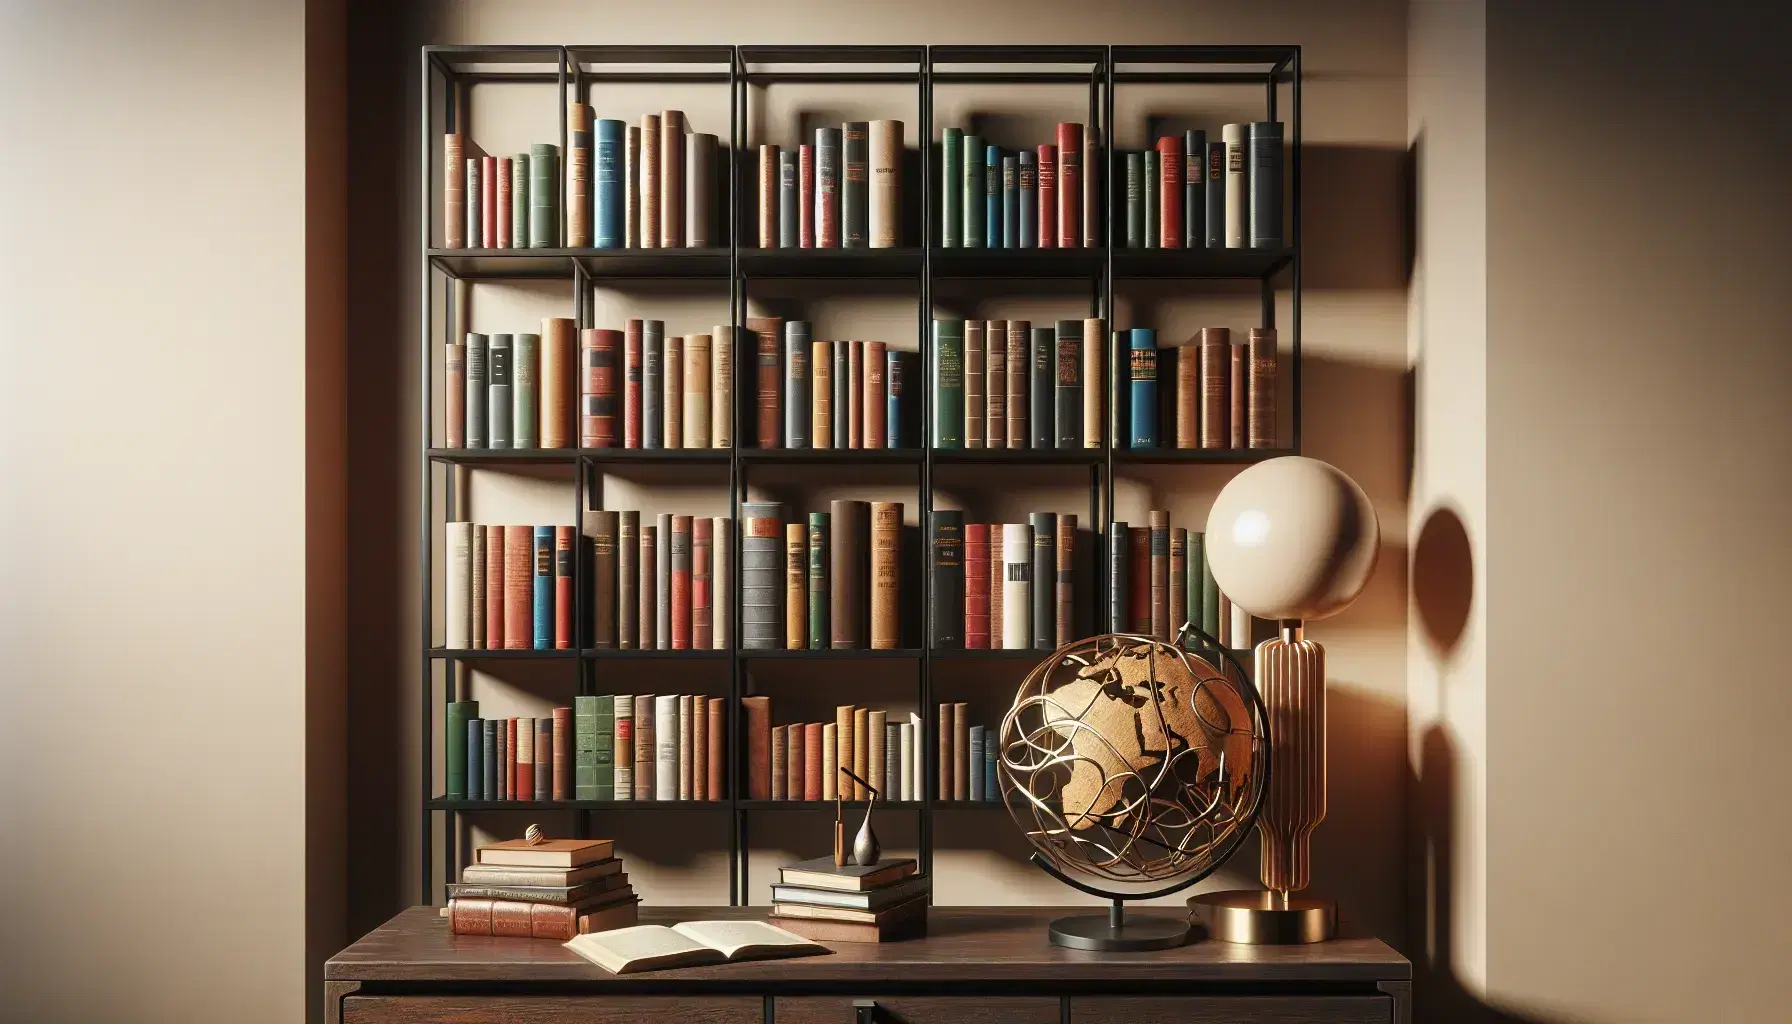 Estantería de madera oscura repleta de libros de colores variados con mesa y lámpara moderna, junto a un globo terráqueo antiguo y figura metálica abstracta.